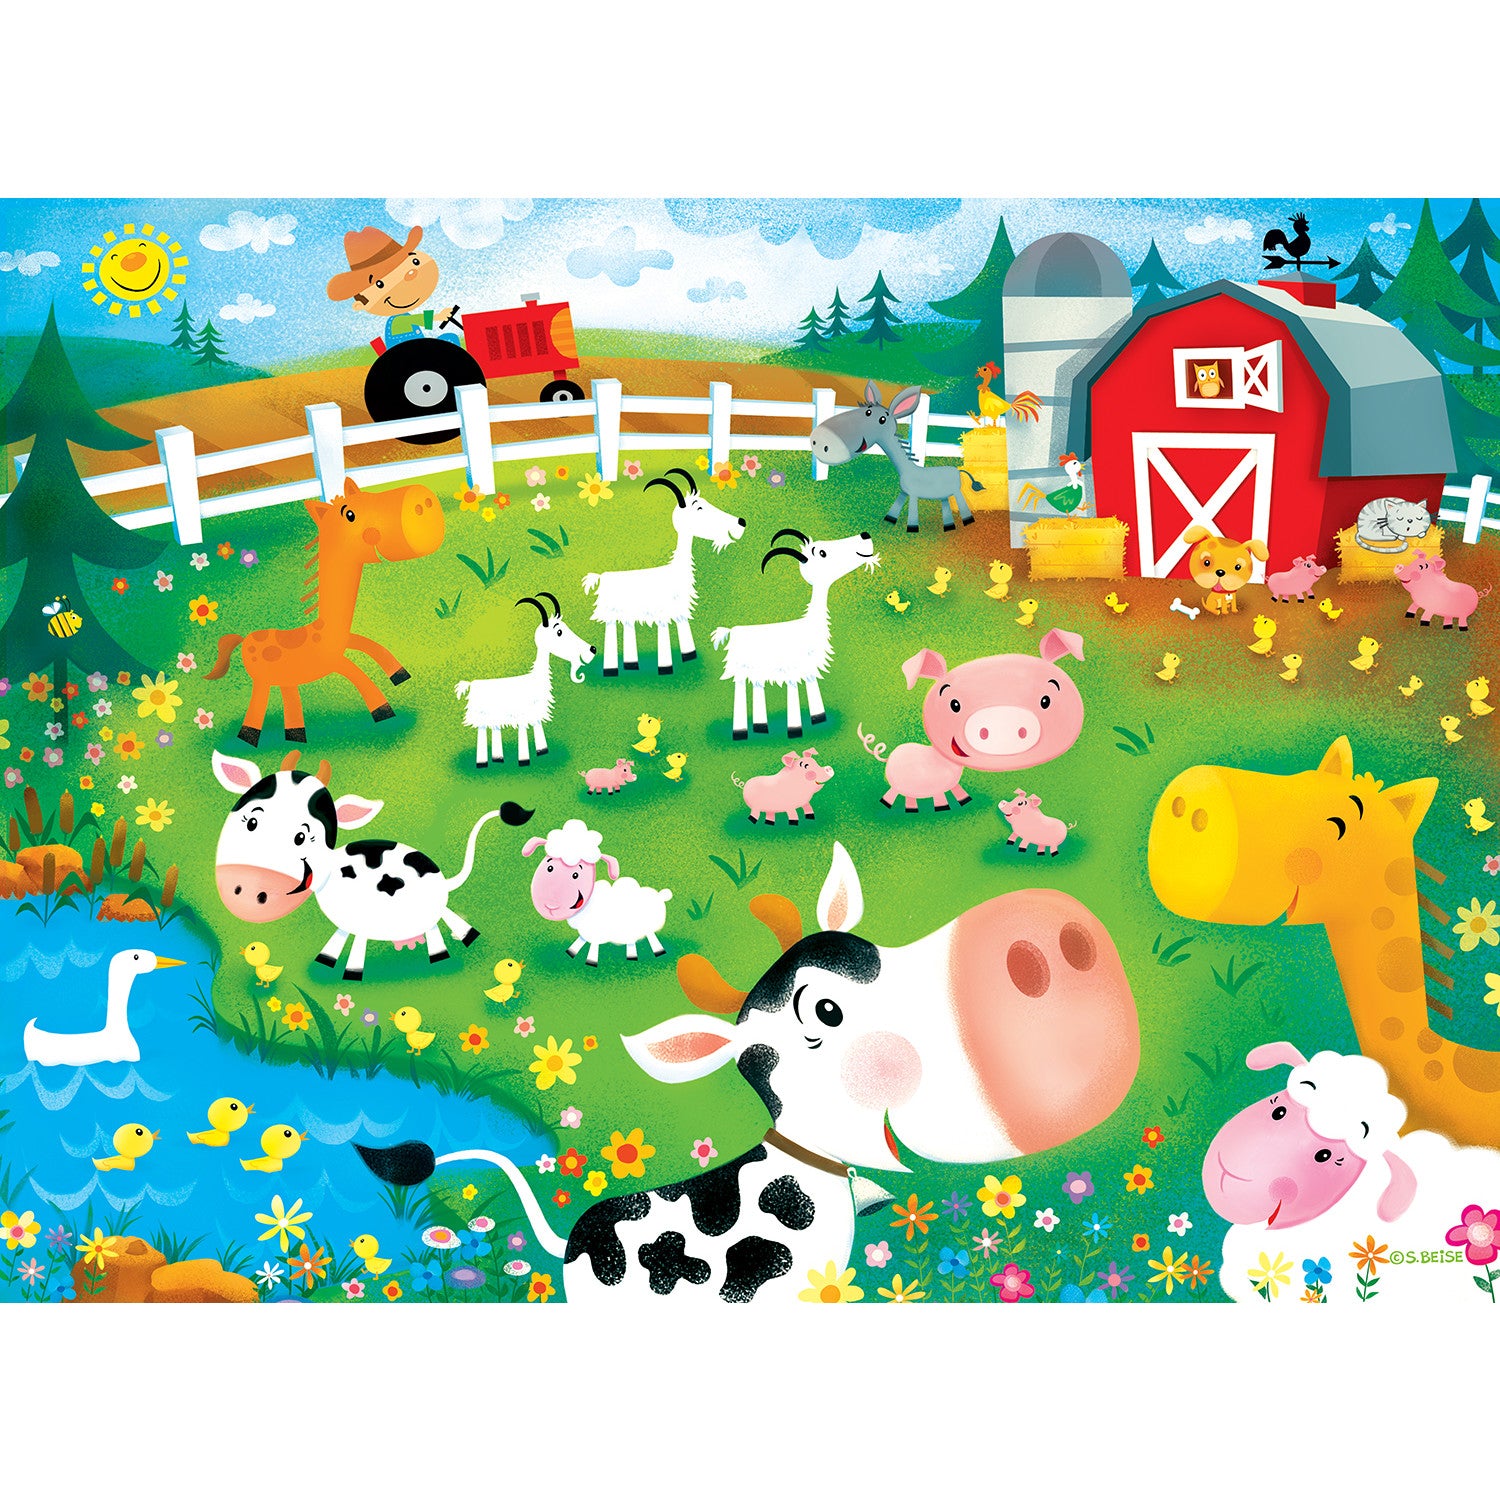 Lil Puzzler - Old MacDonald's Farm 24 Piece Puzzle